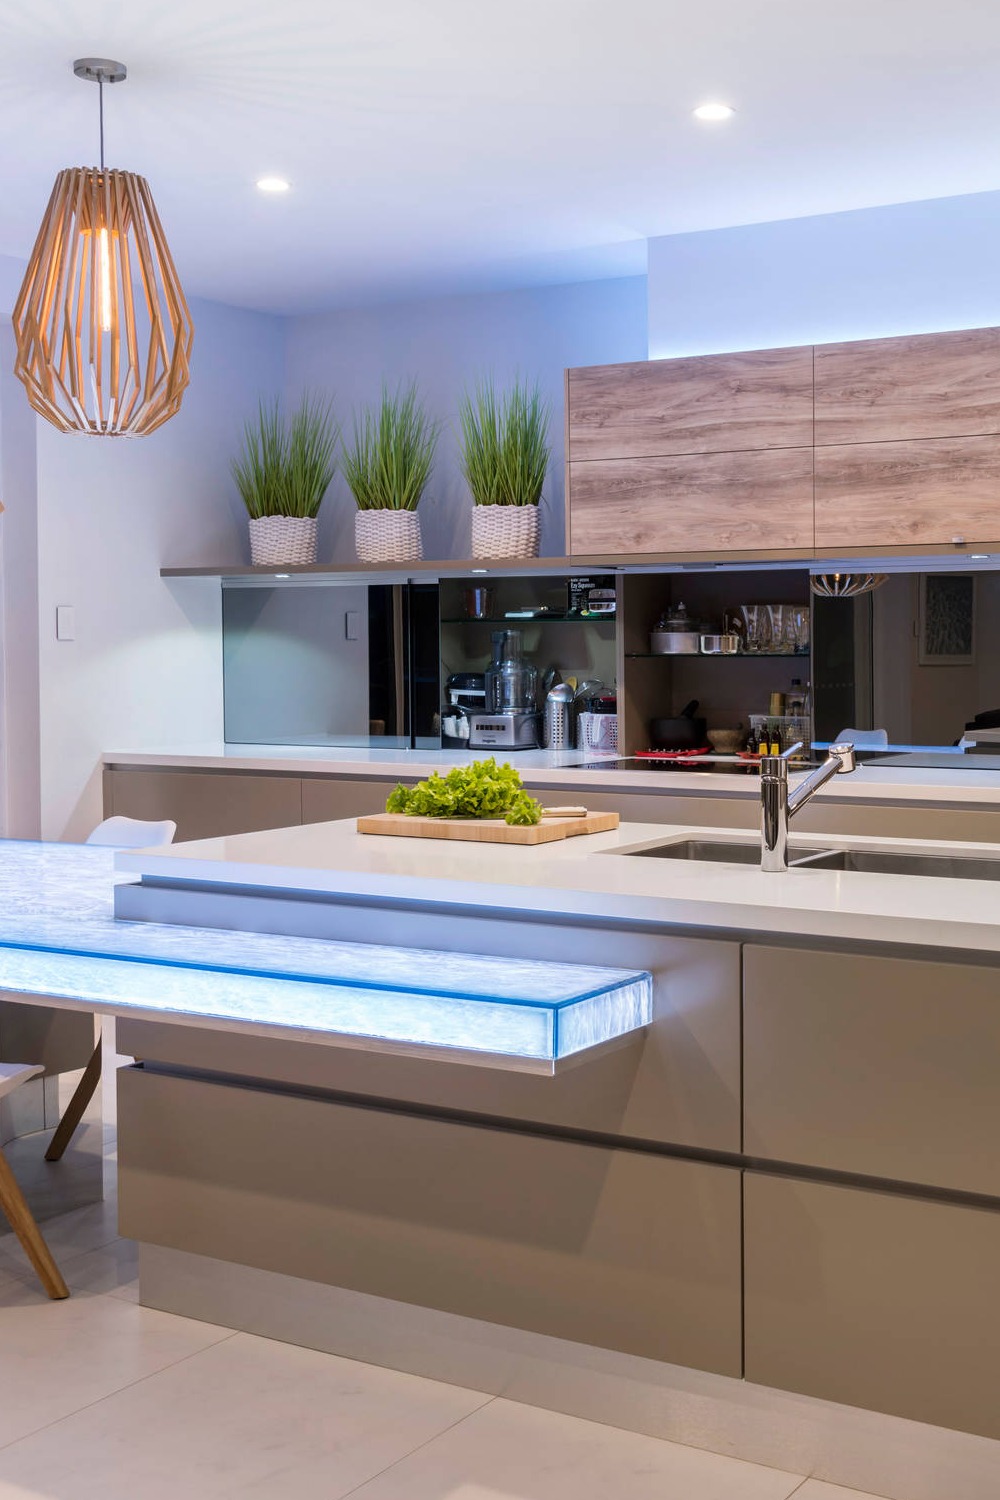 Custom Glass Countertop Heat Resistant Double Bowl Sink Home Bar Material Create